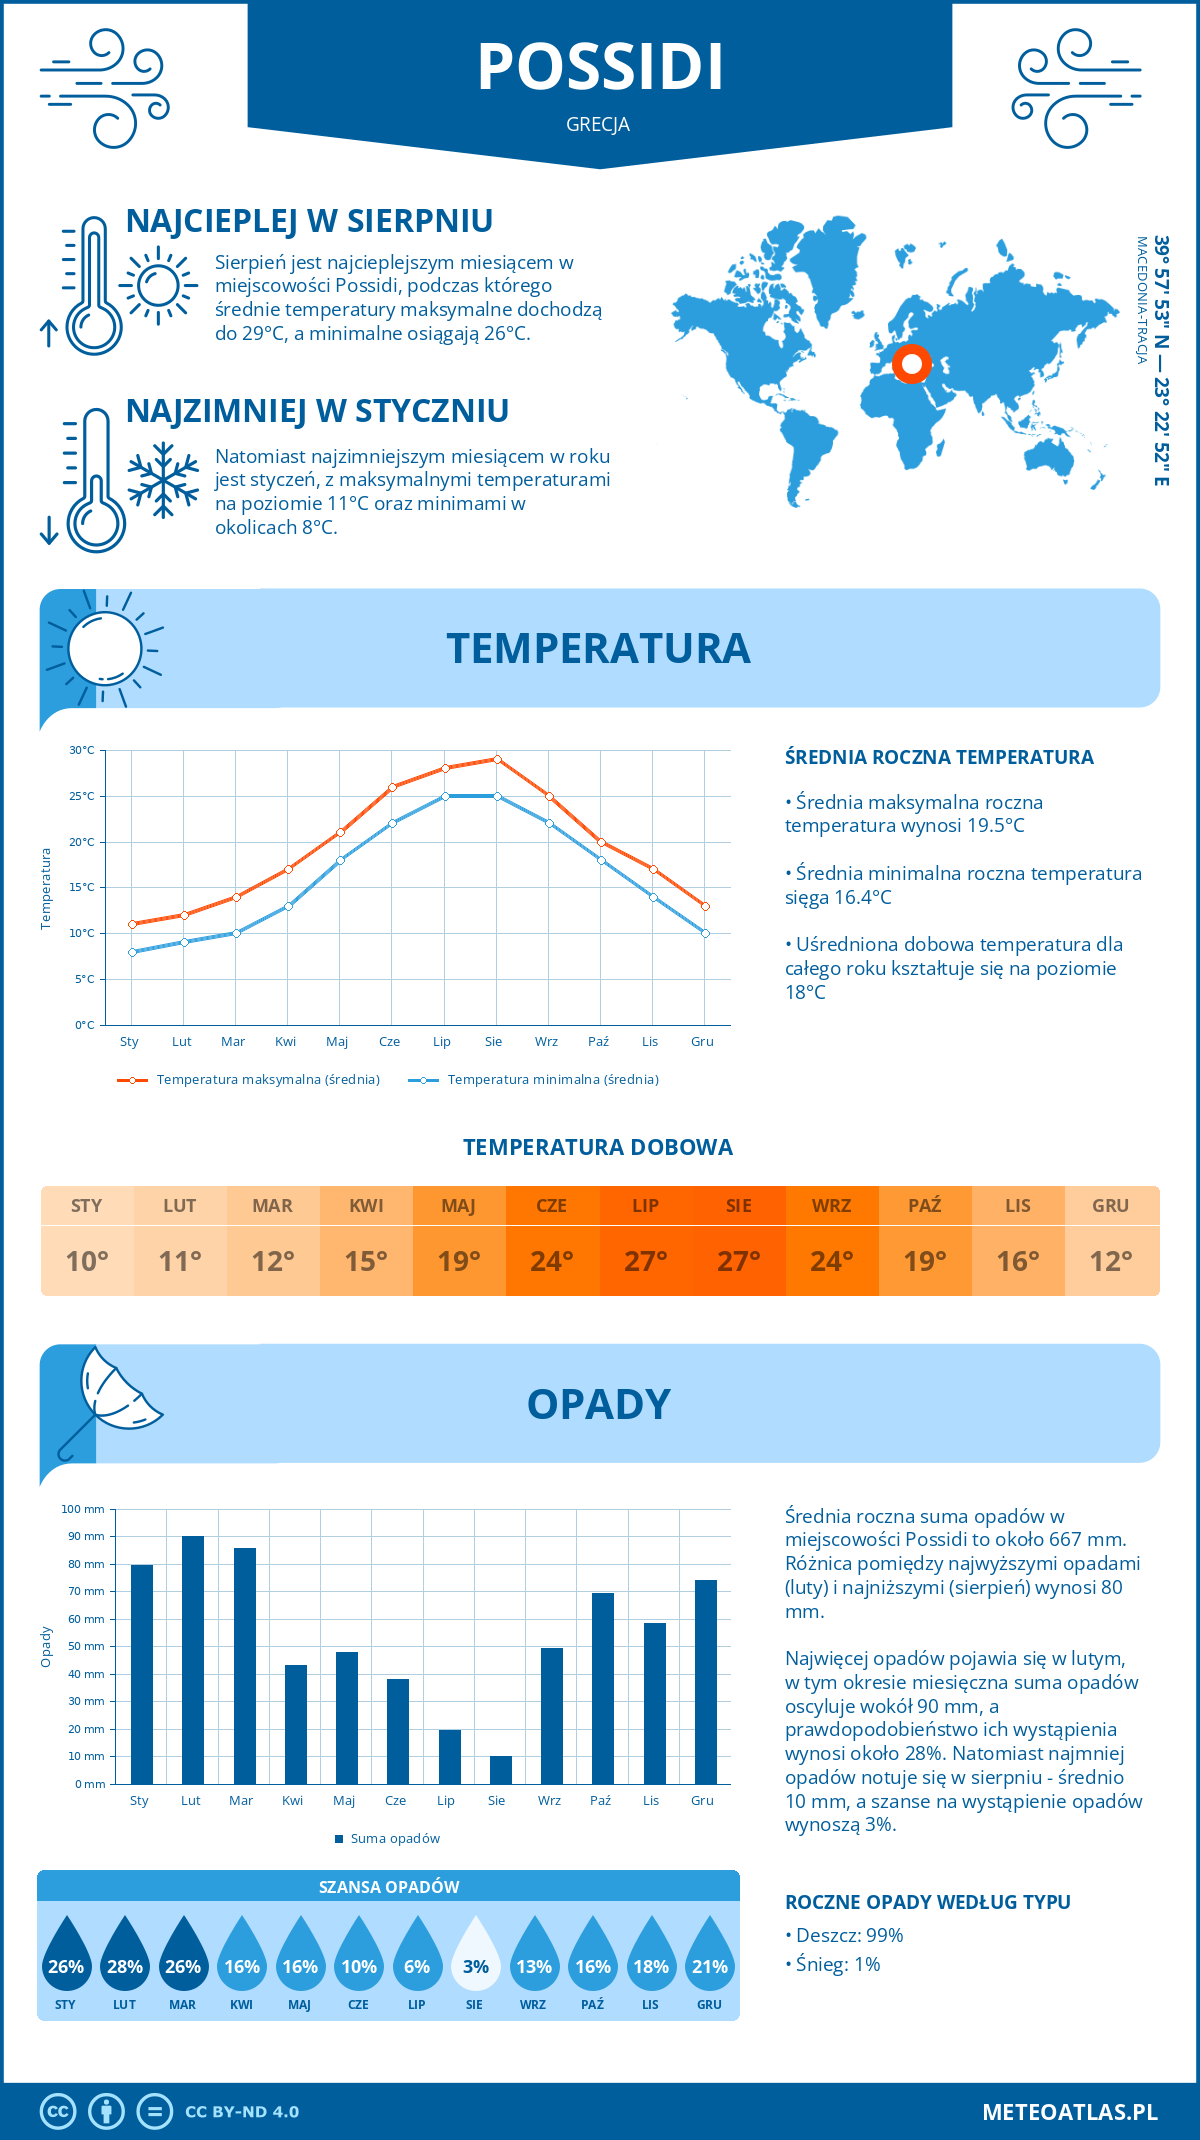 Pogoda Possidi (Grecja). Temperatura oraz opady.